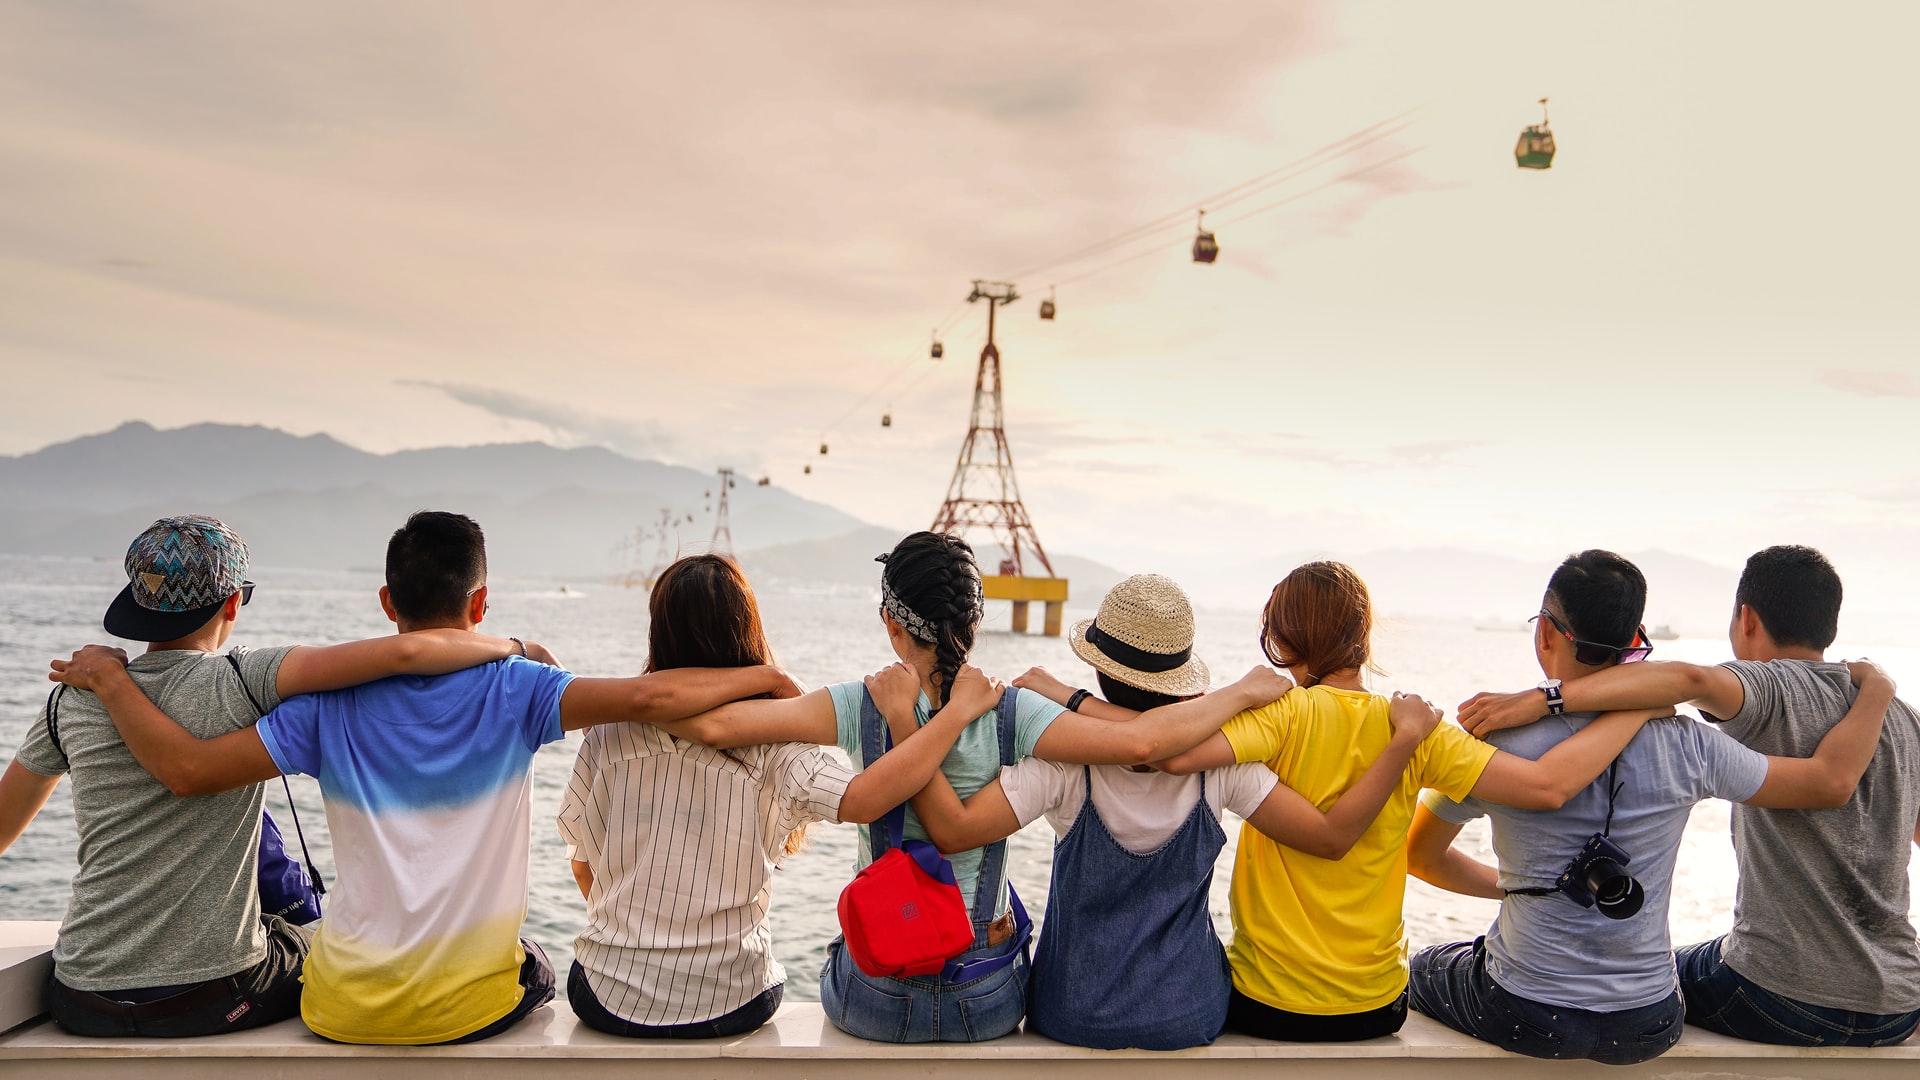 5 Fun Ways to Celebrate International Friendship Day